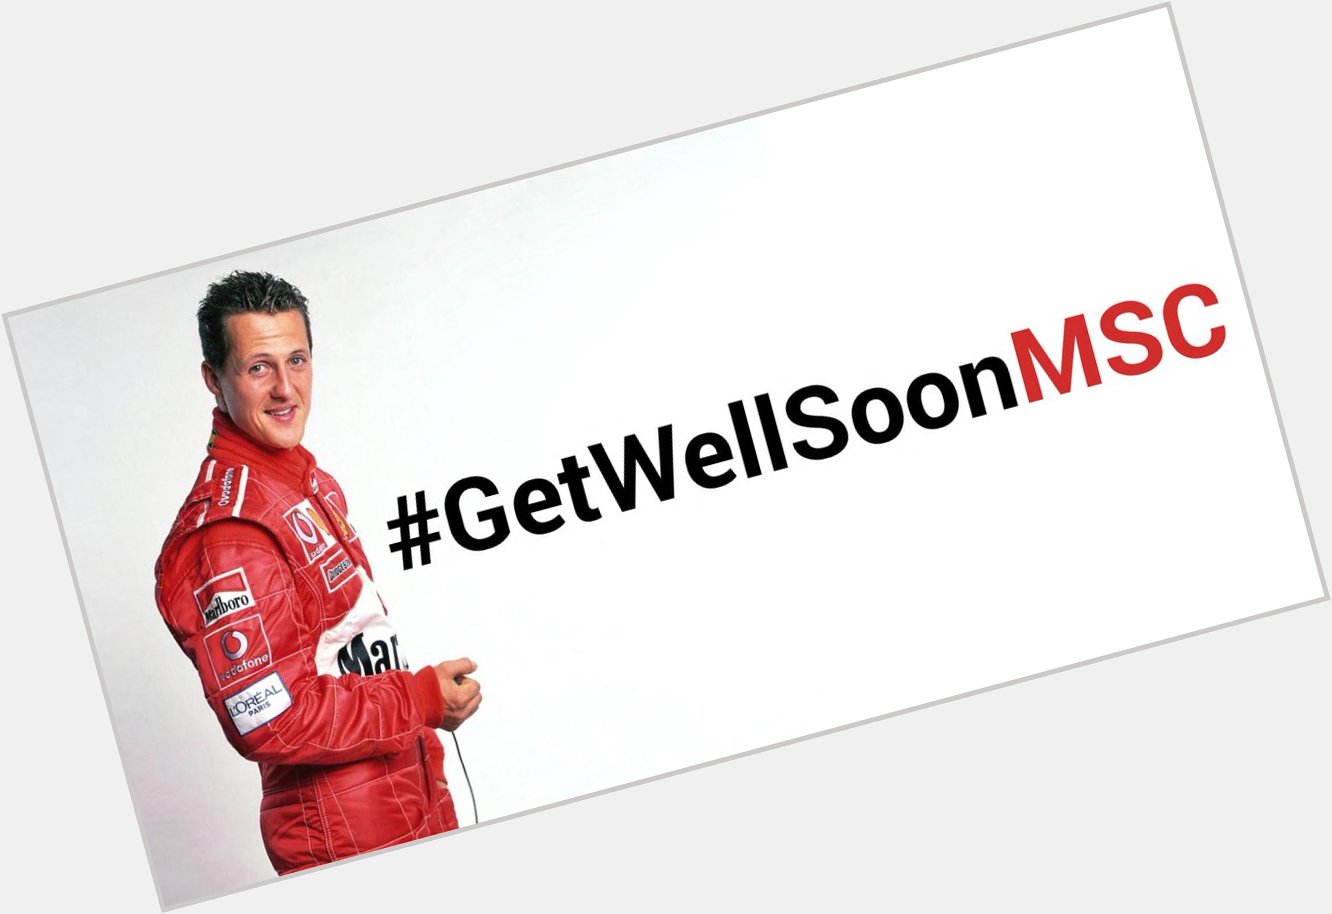 On his birthday we wish a speedy recovery to Formula 1 star Michael Schumacher. Happy Birthday. 